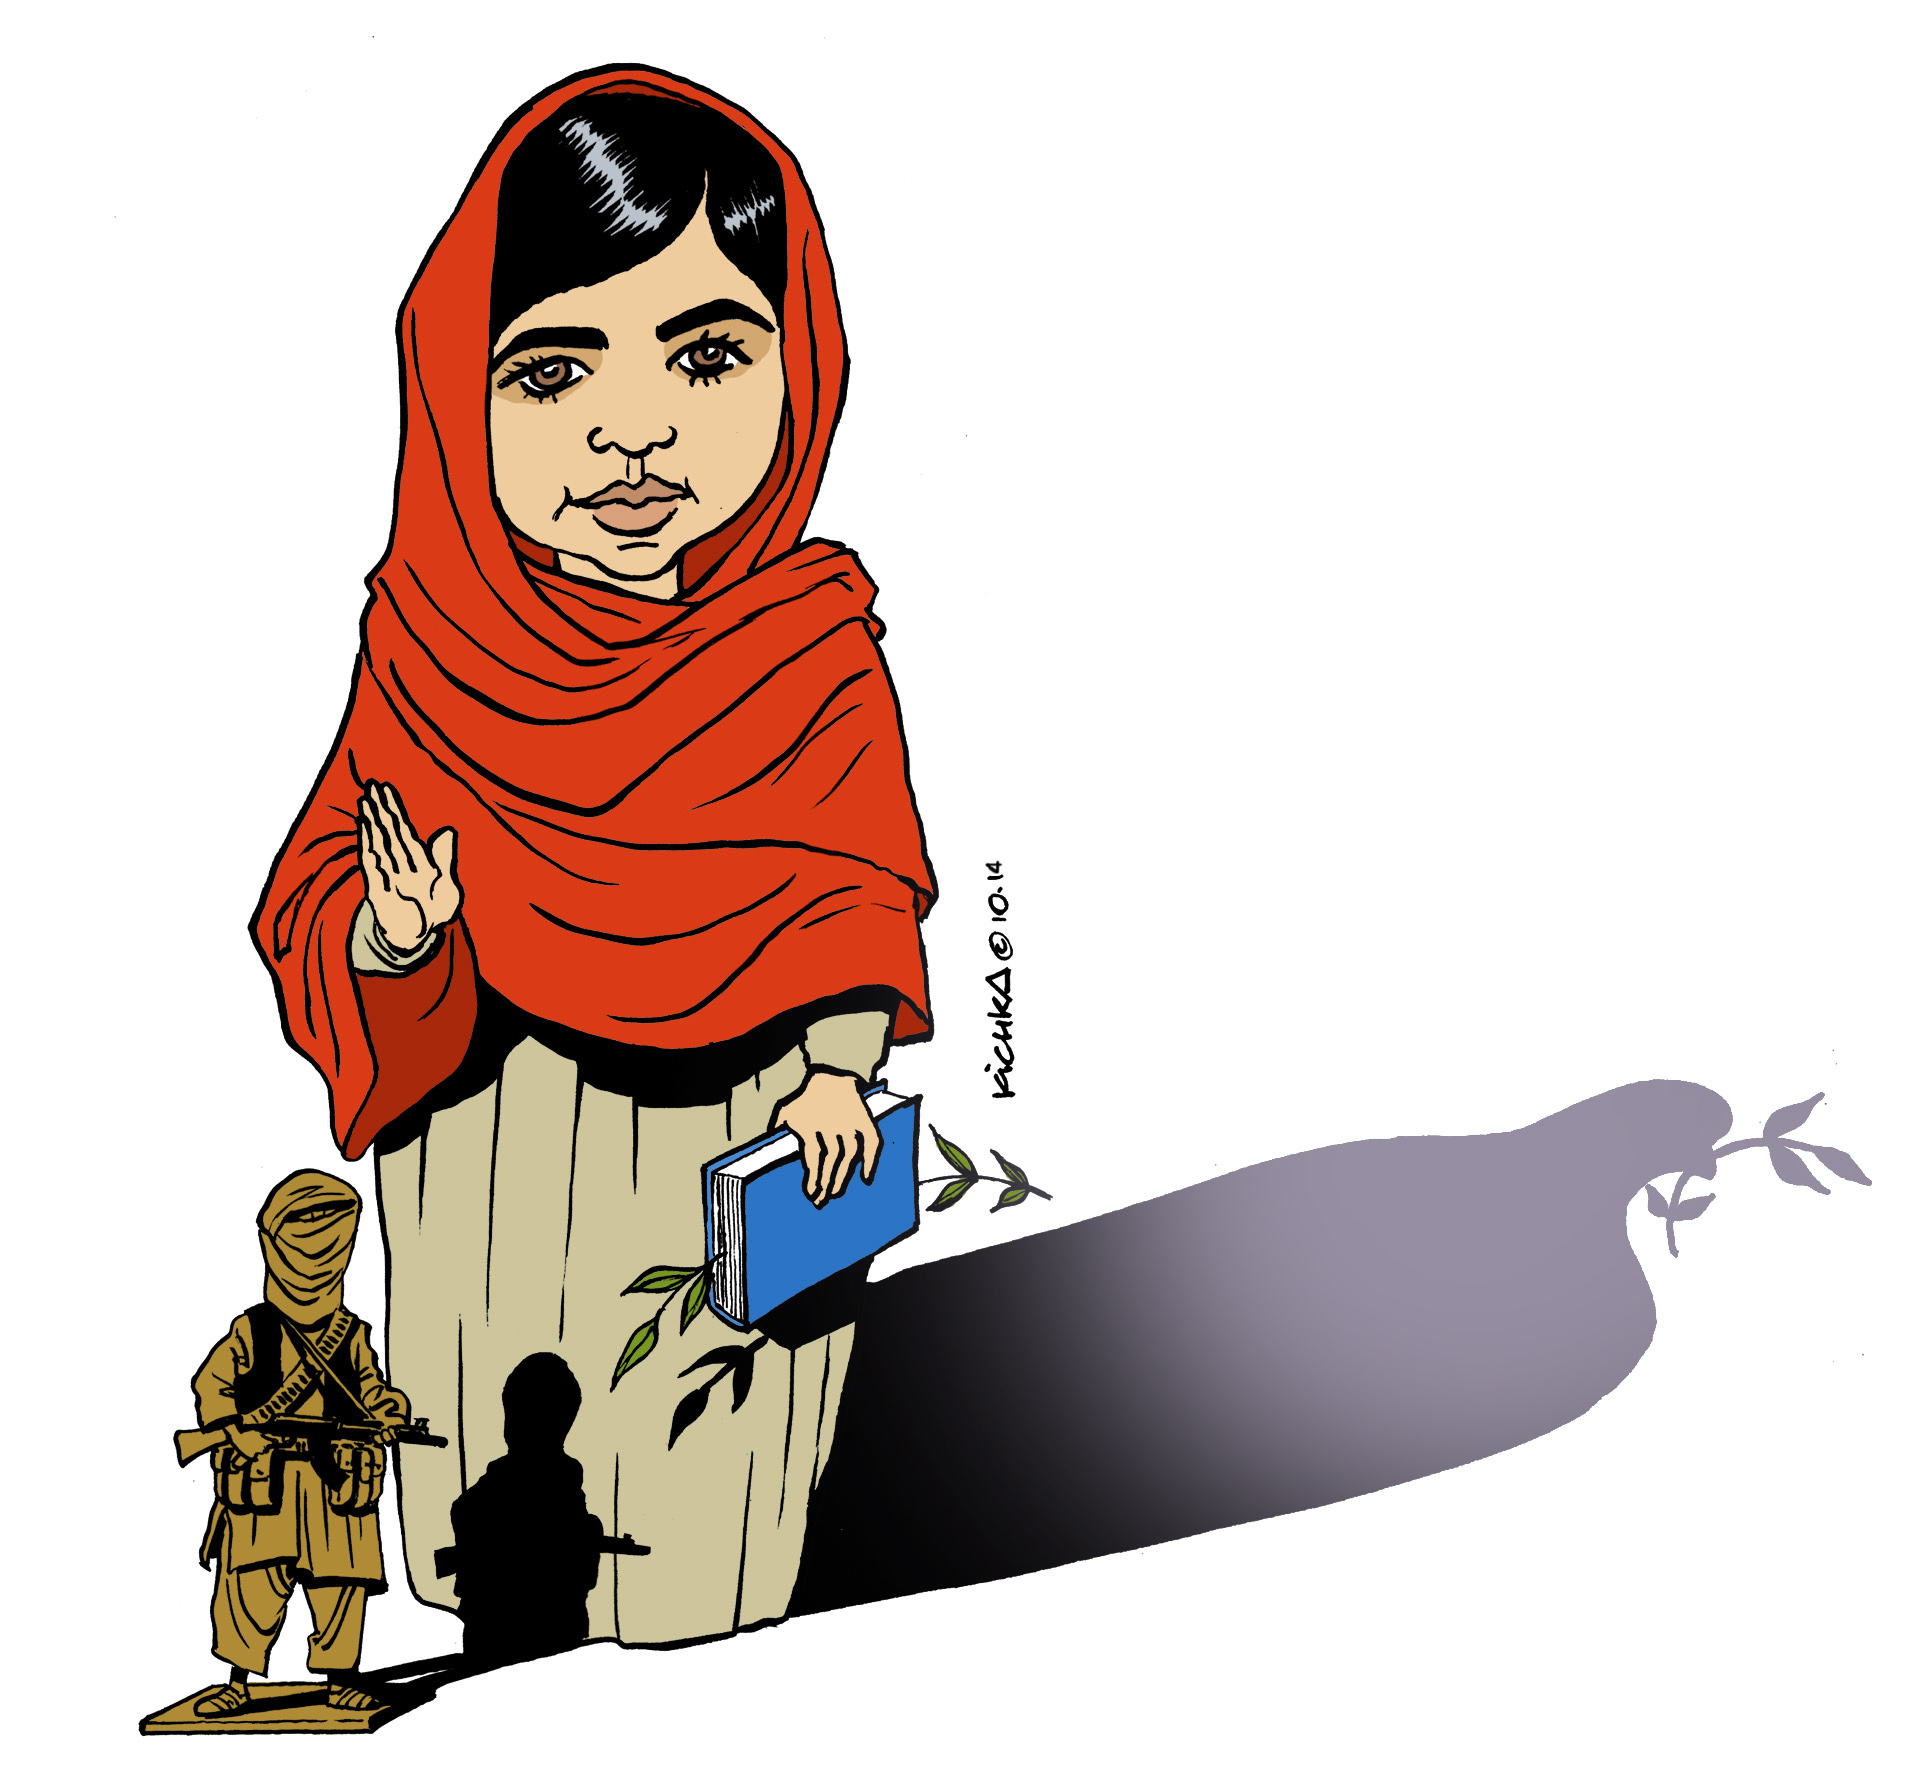 Quoi de neuf aujourd'hui ? - Page 7 Malala-peace-nobel-prize-2014